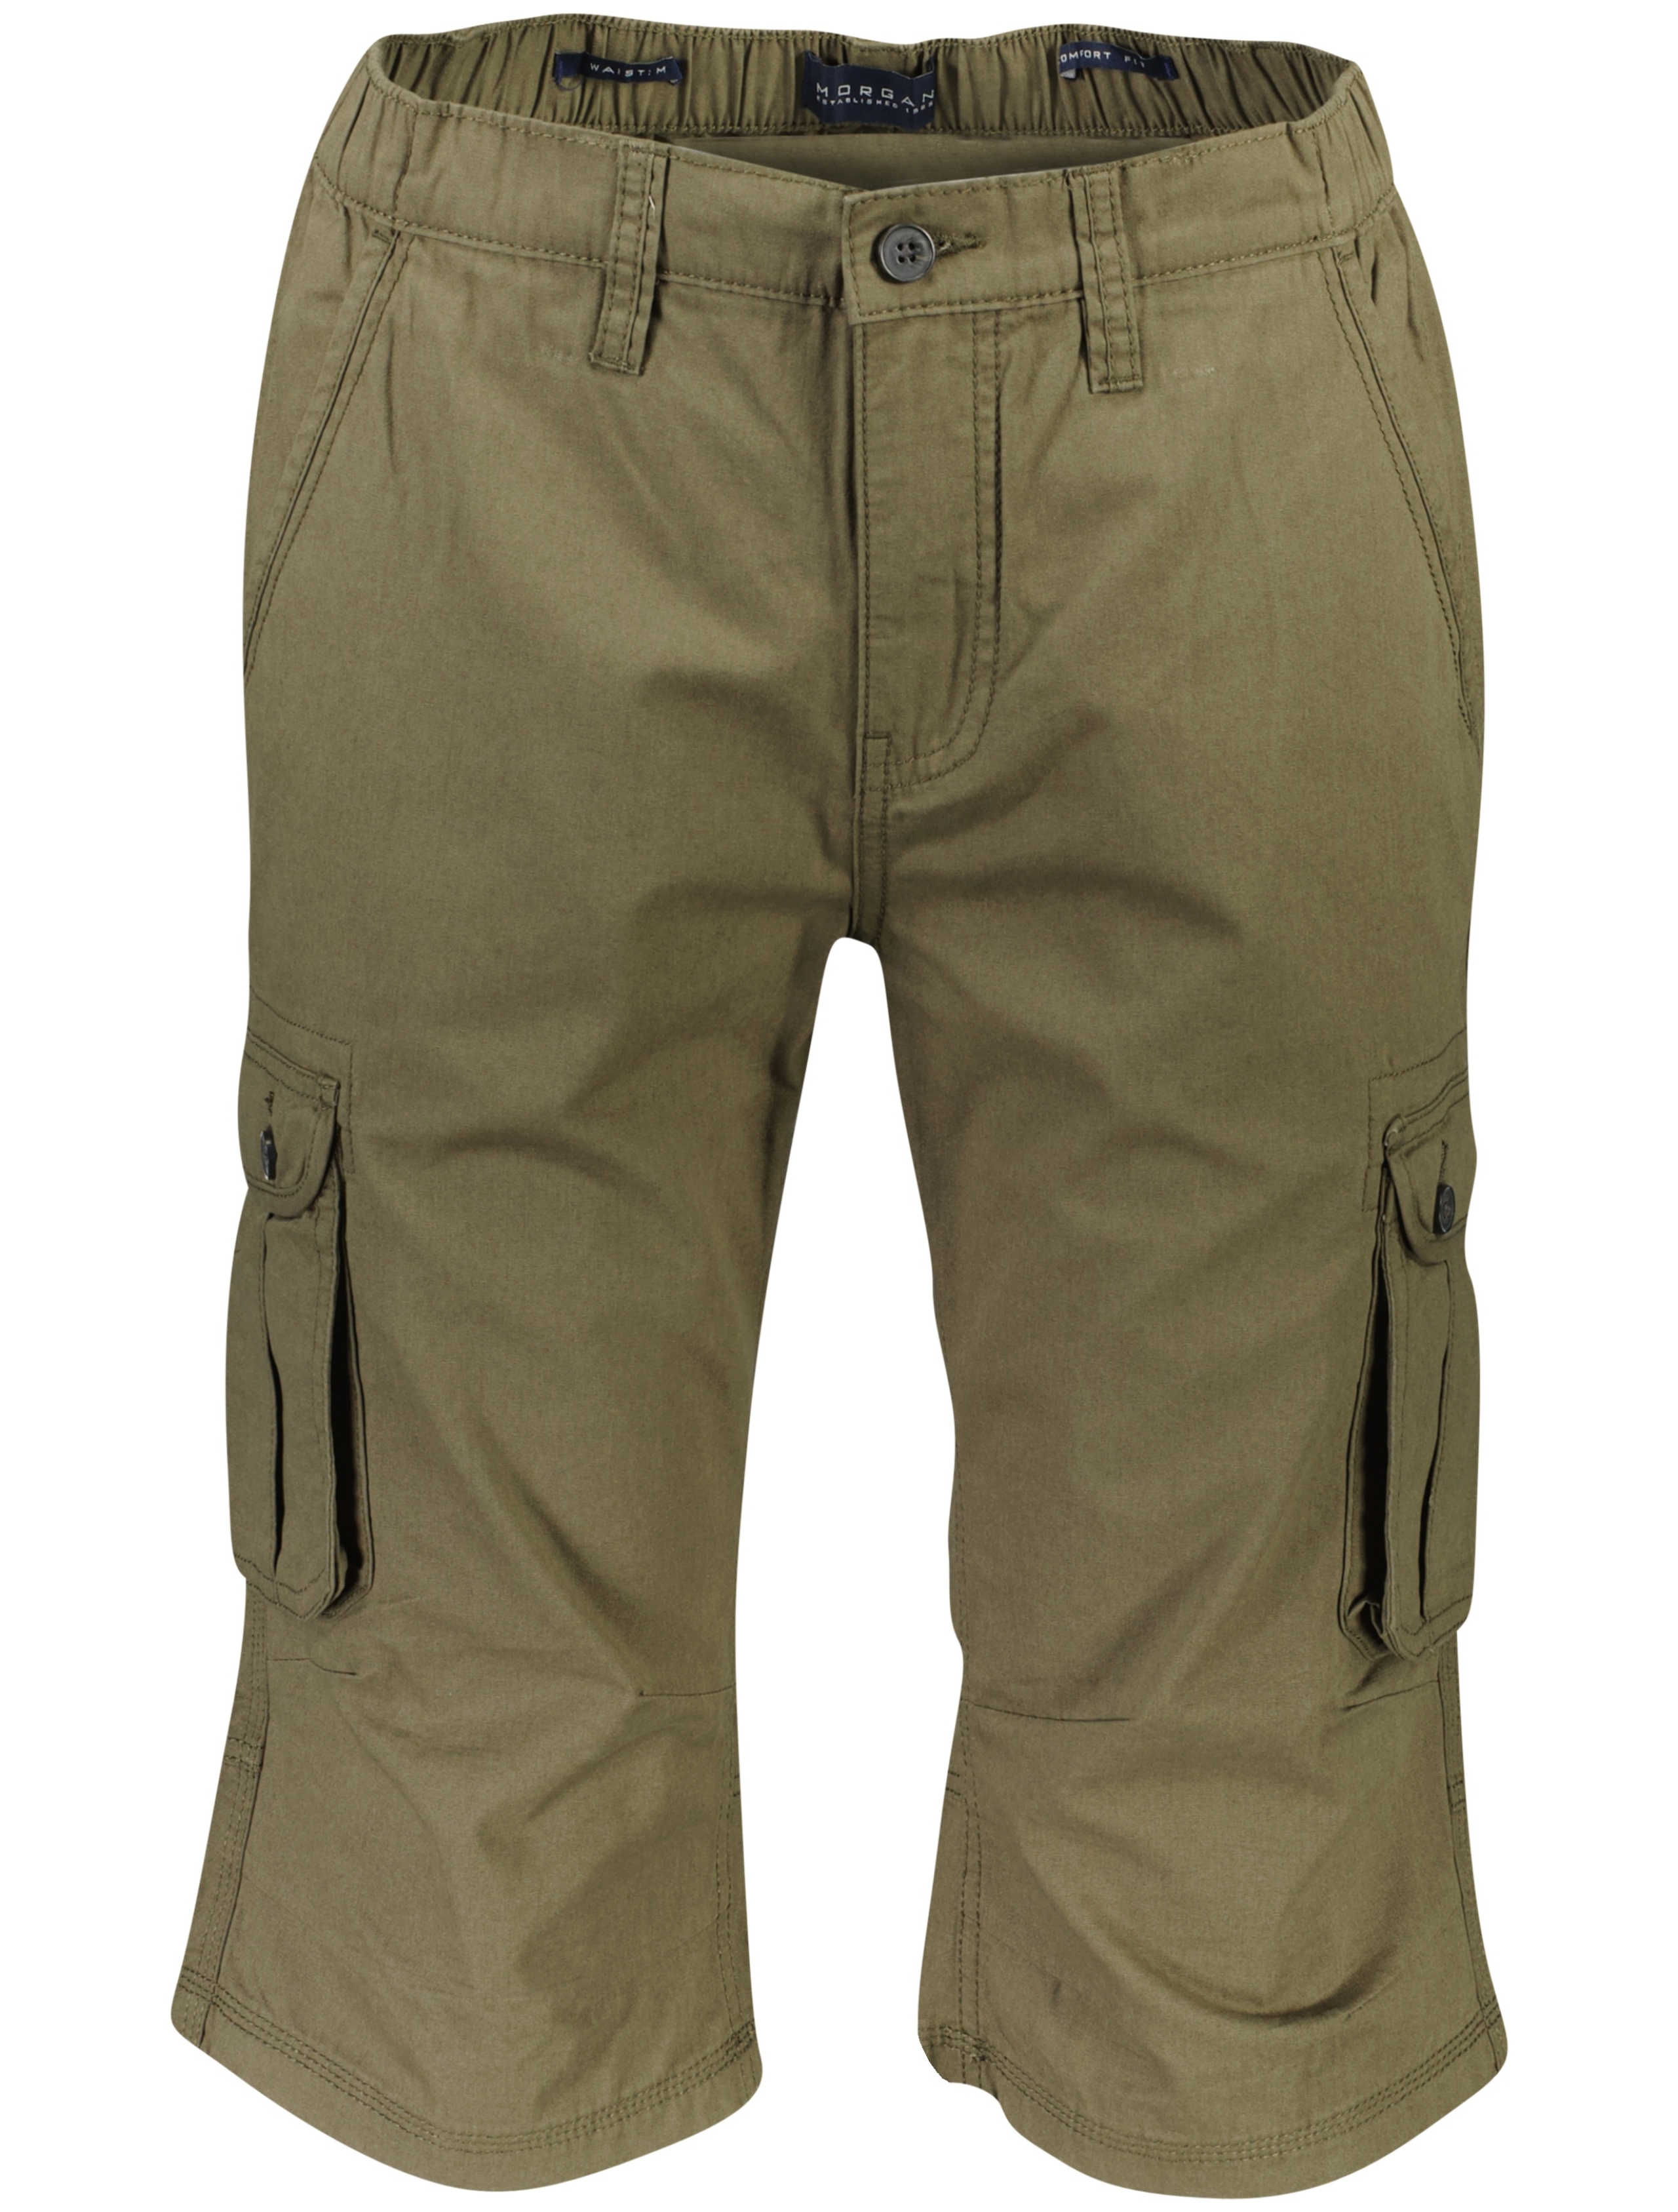 Jack's Cargo shorts grön / army